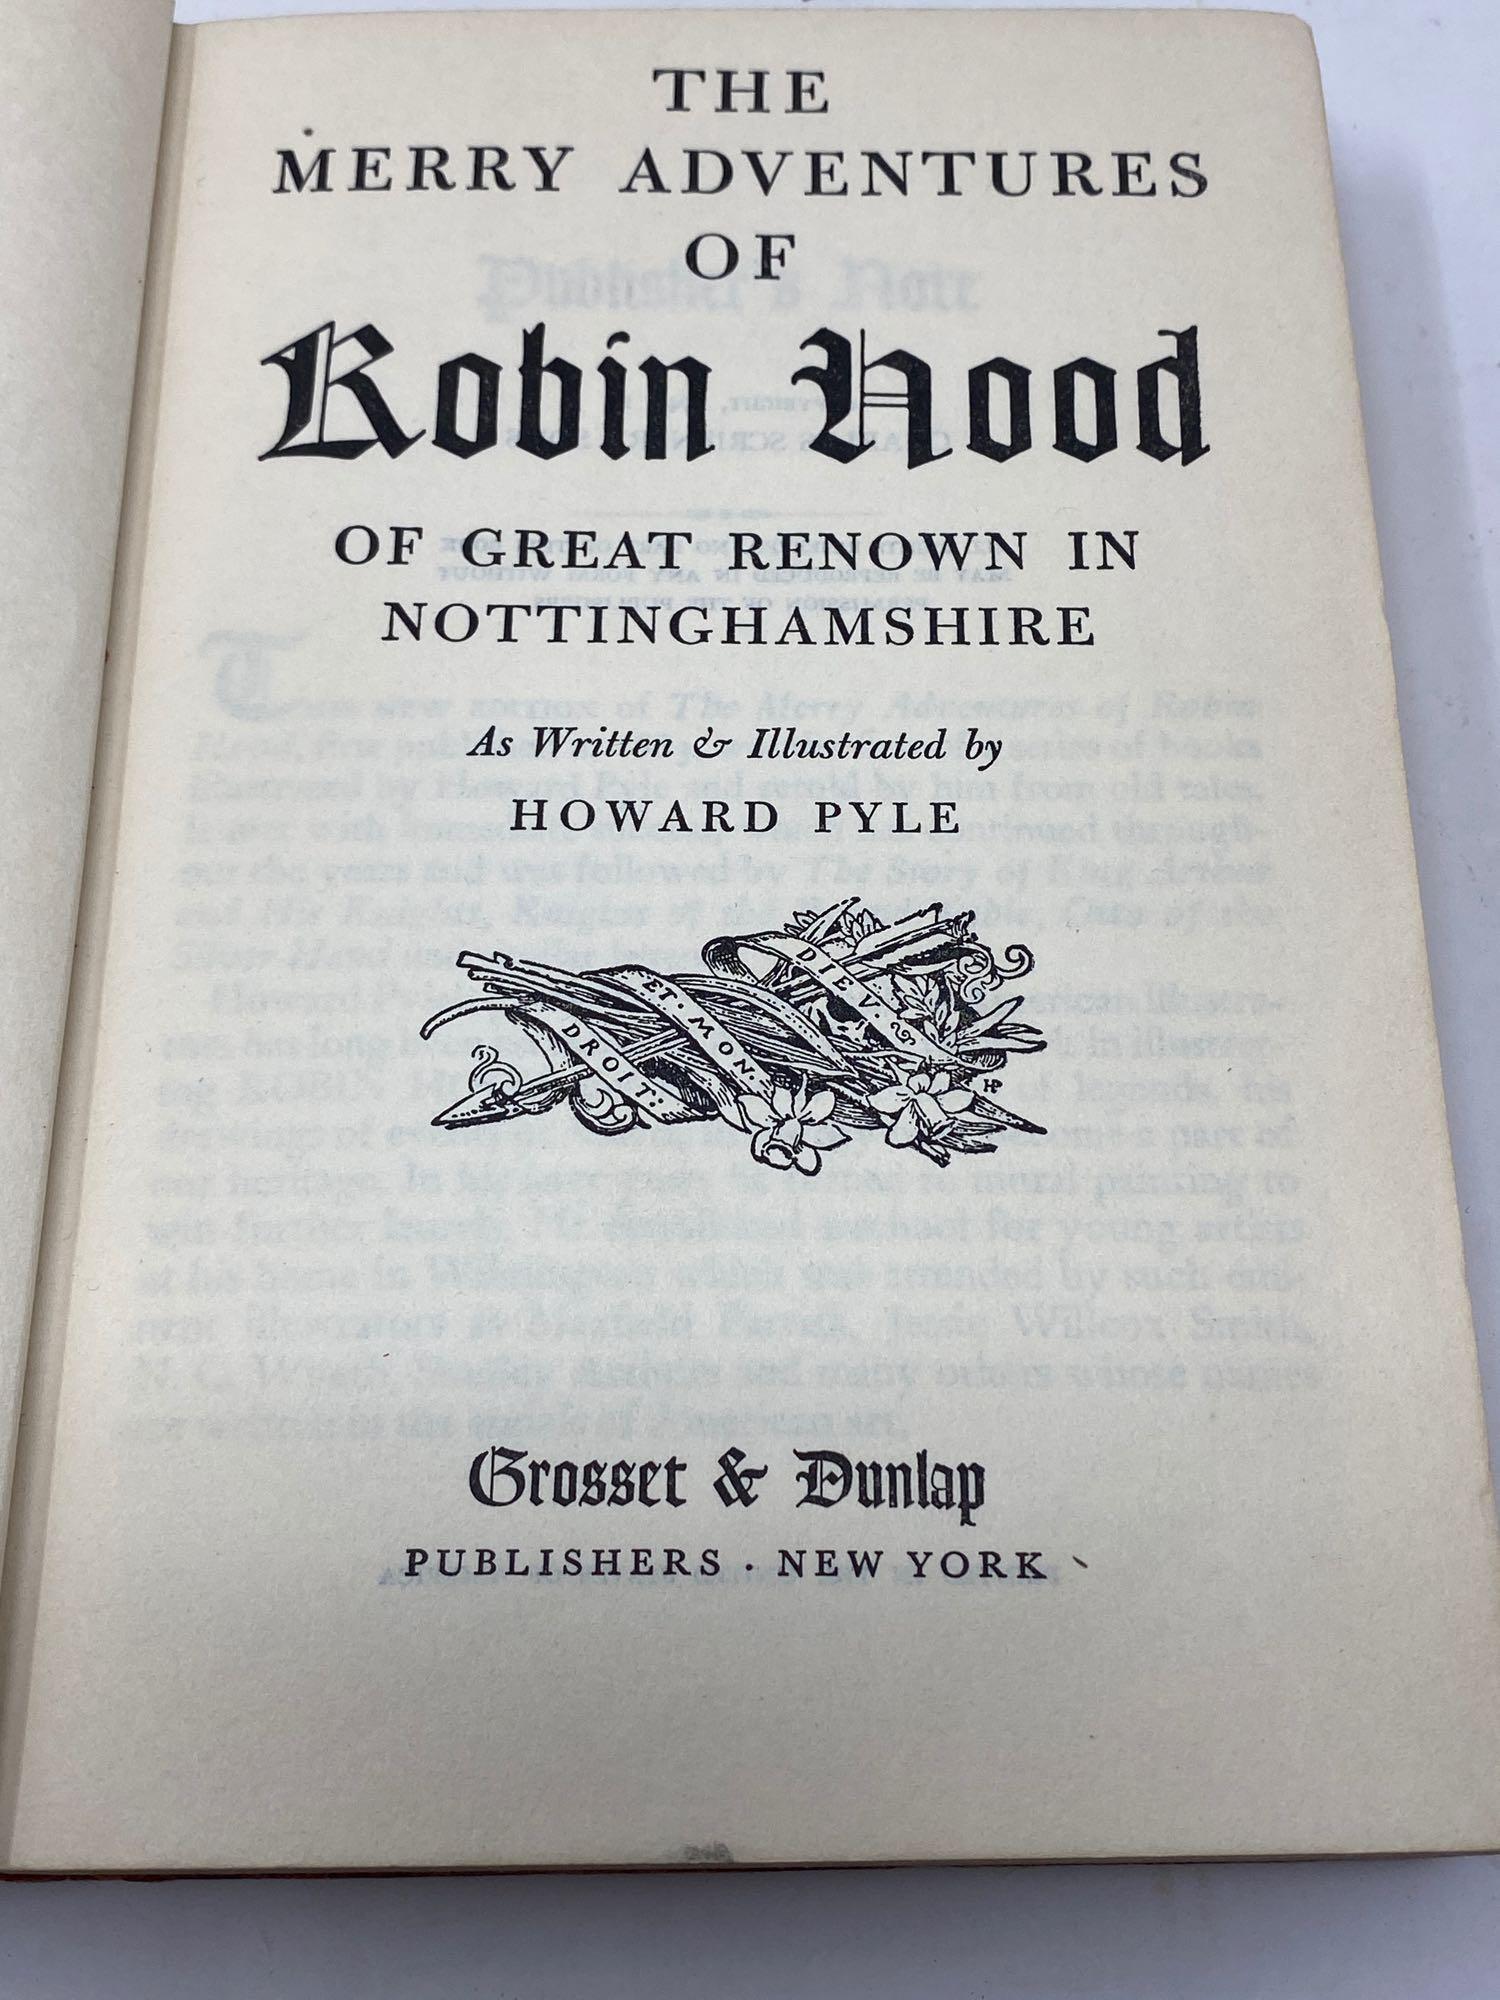 Vintage, Classic Hard Bound Robin Hood Books